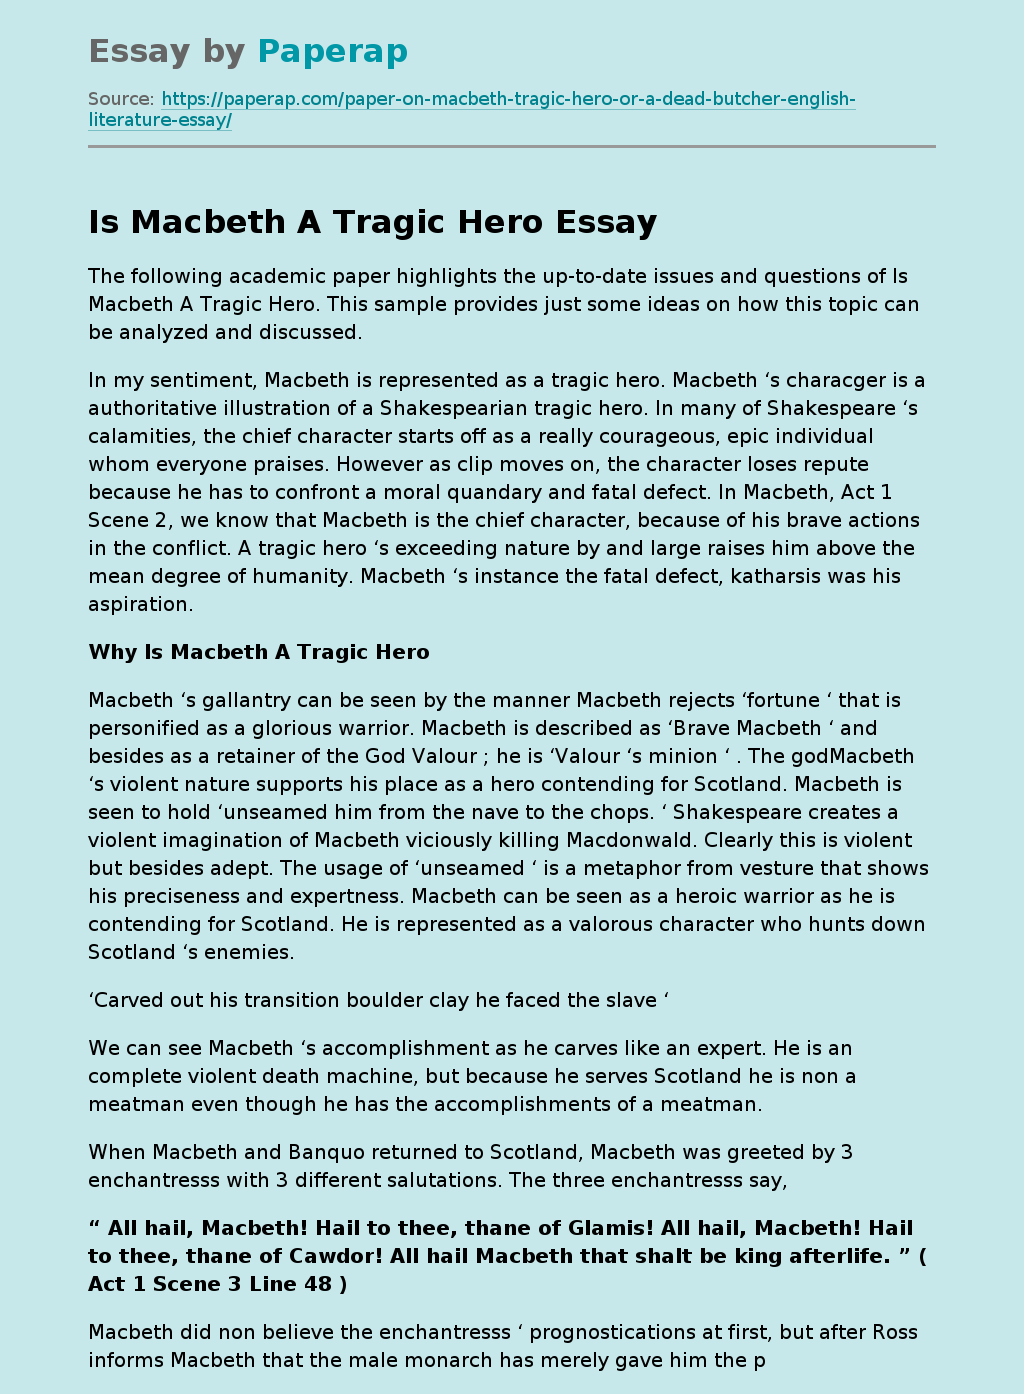 Is Macbeth A Tragic Hero